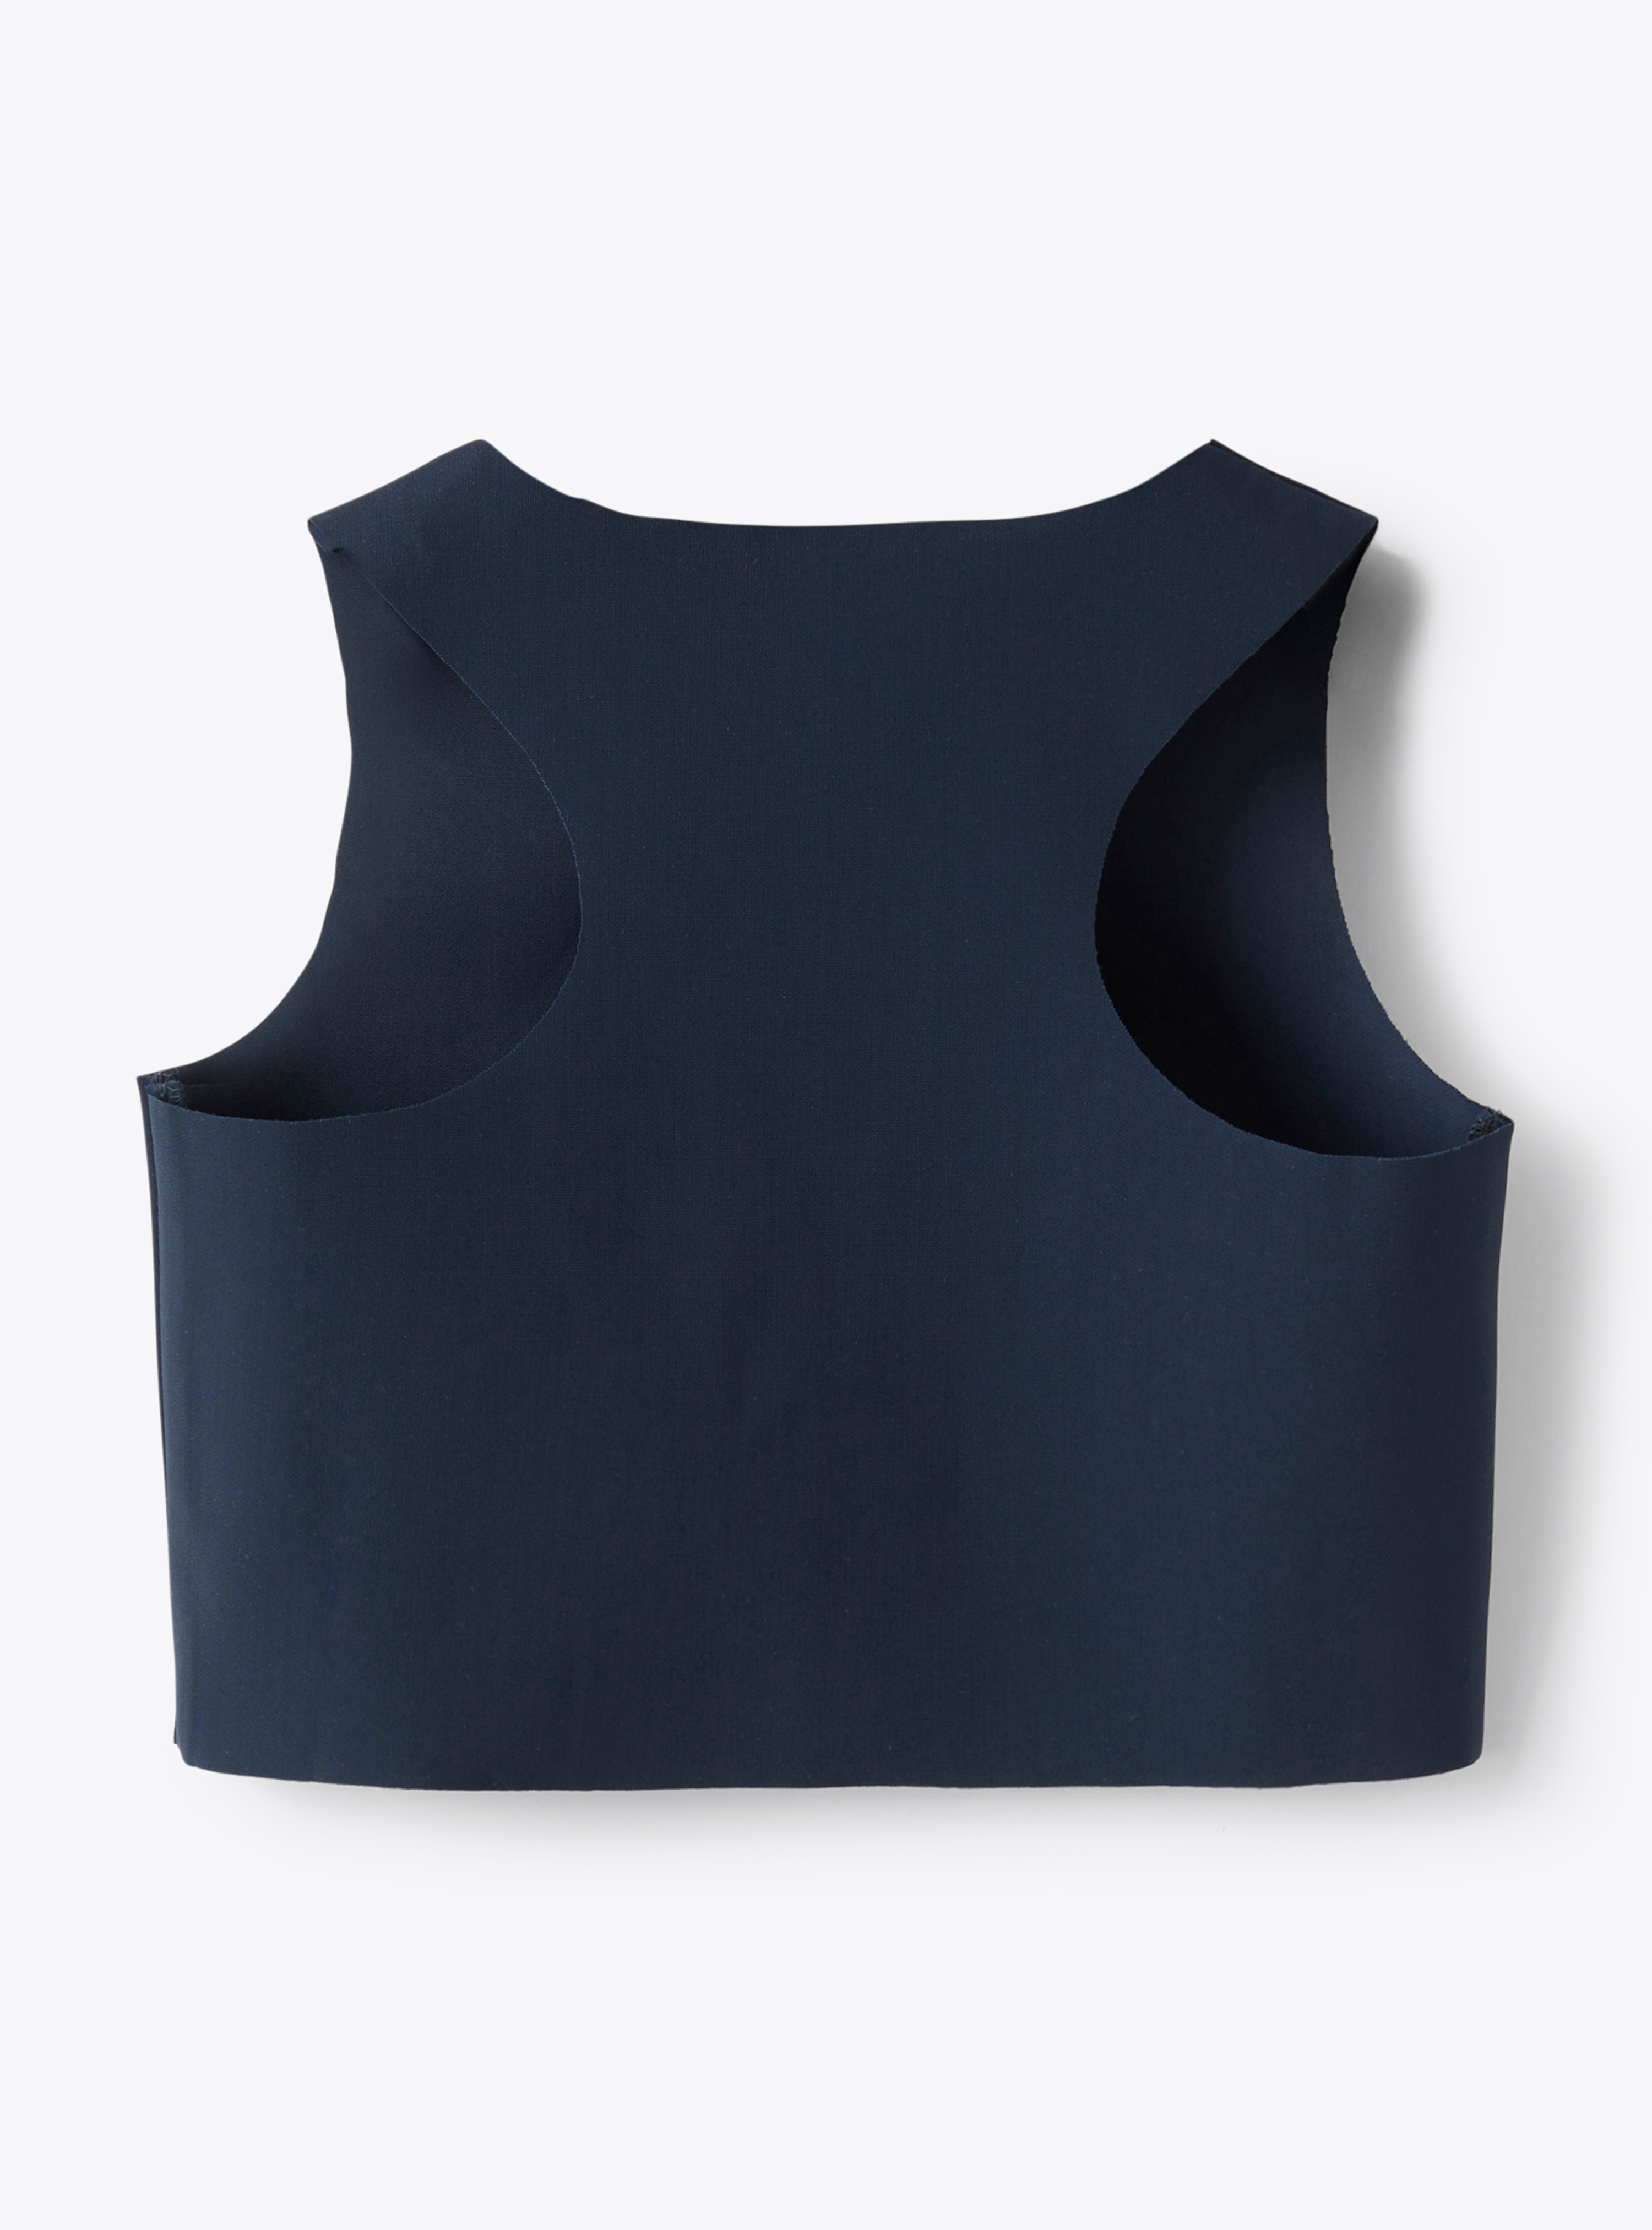 Синяя укороченная майка из ткани Sensitive® Fabrics - СИНИЙ | Il Gufo